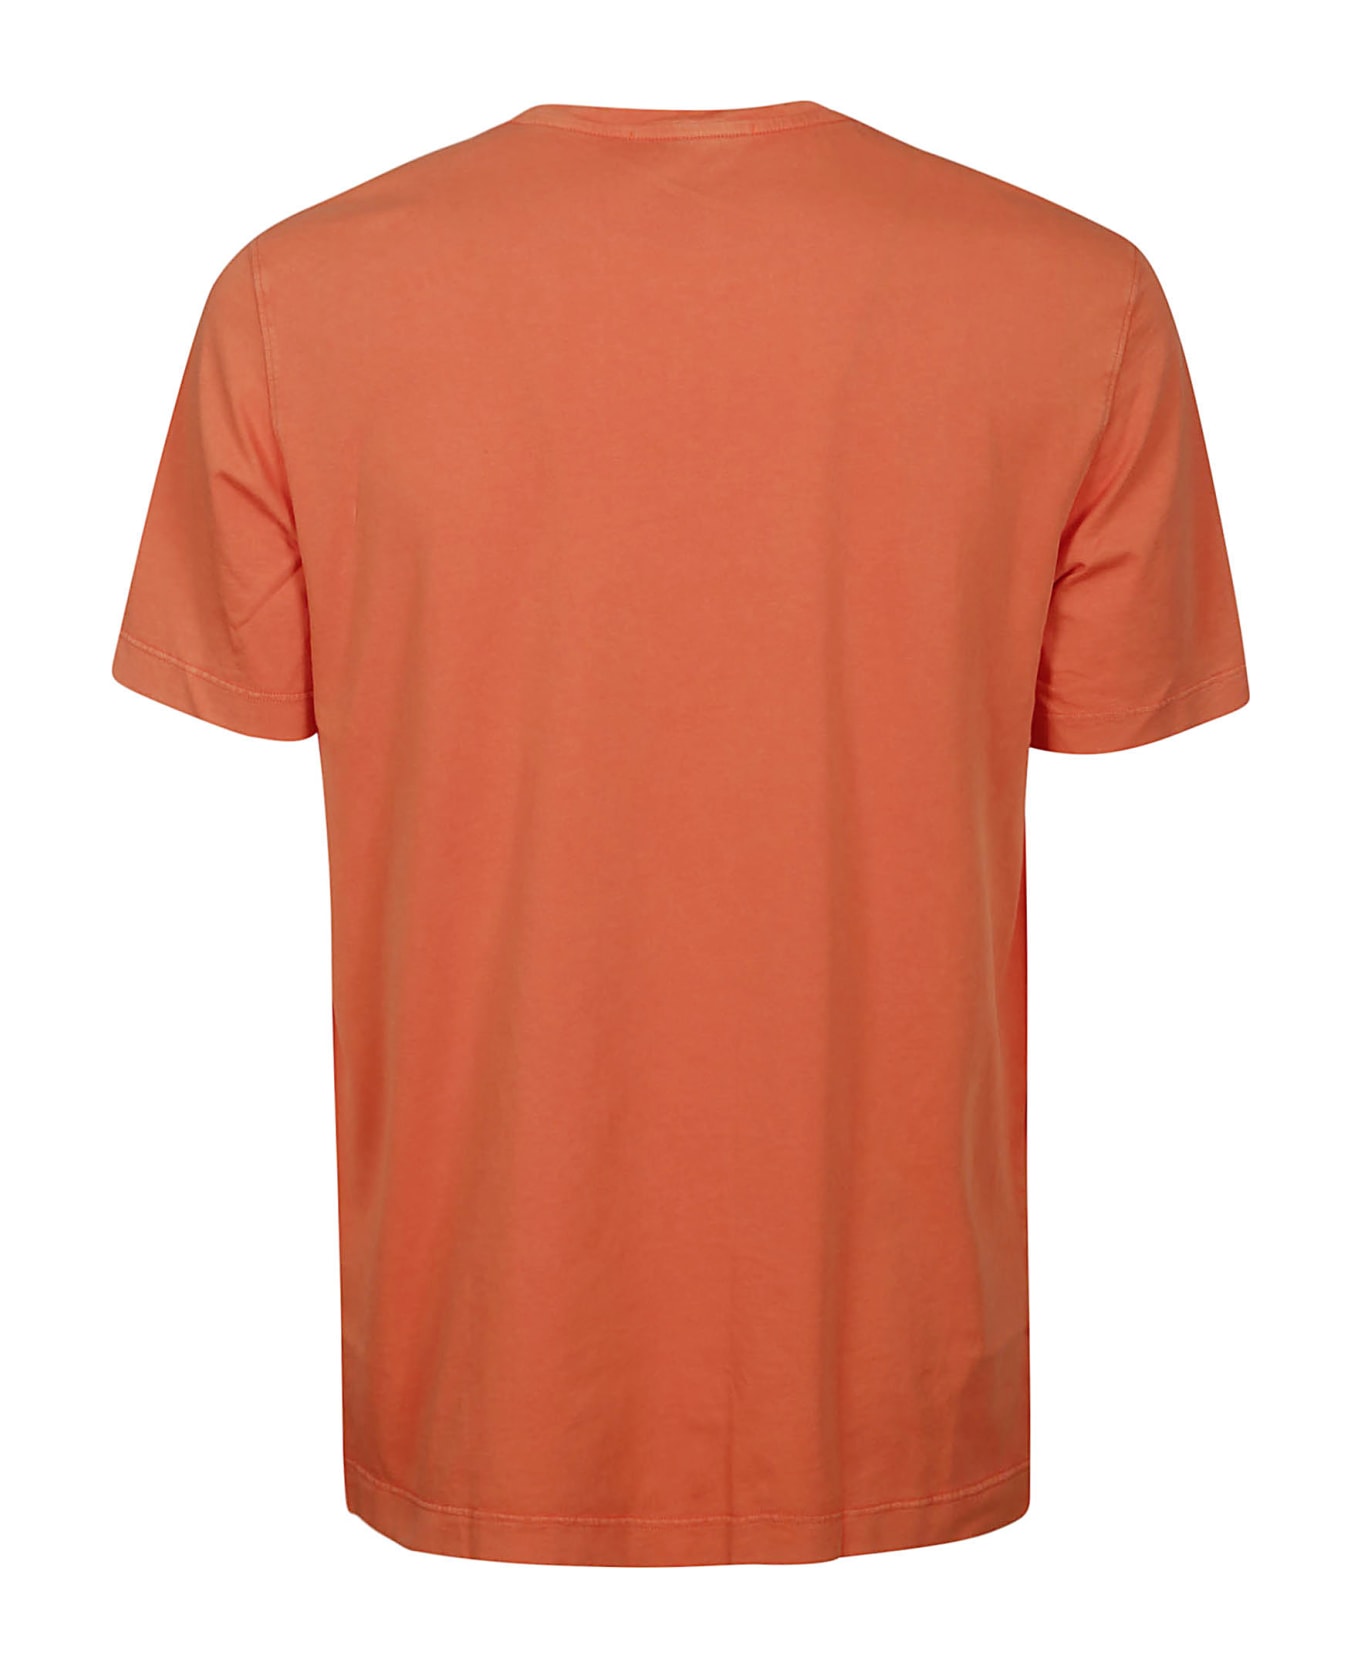 Drumohr Tshirt Pocket - Orange